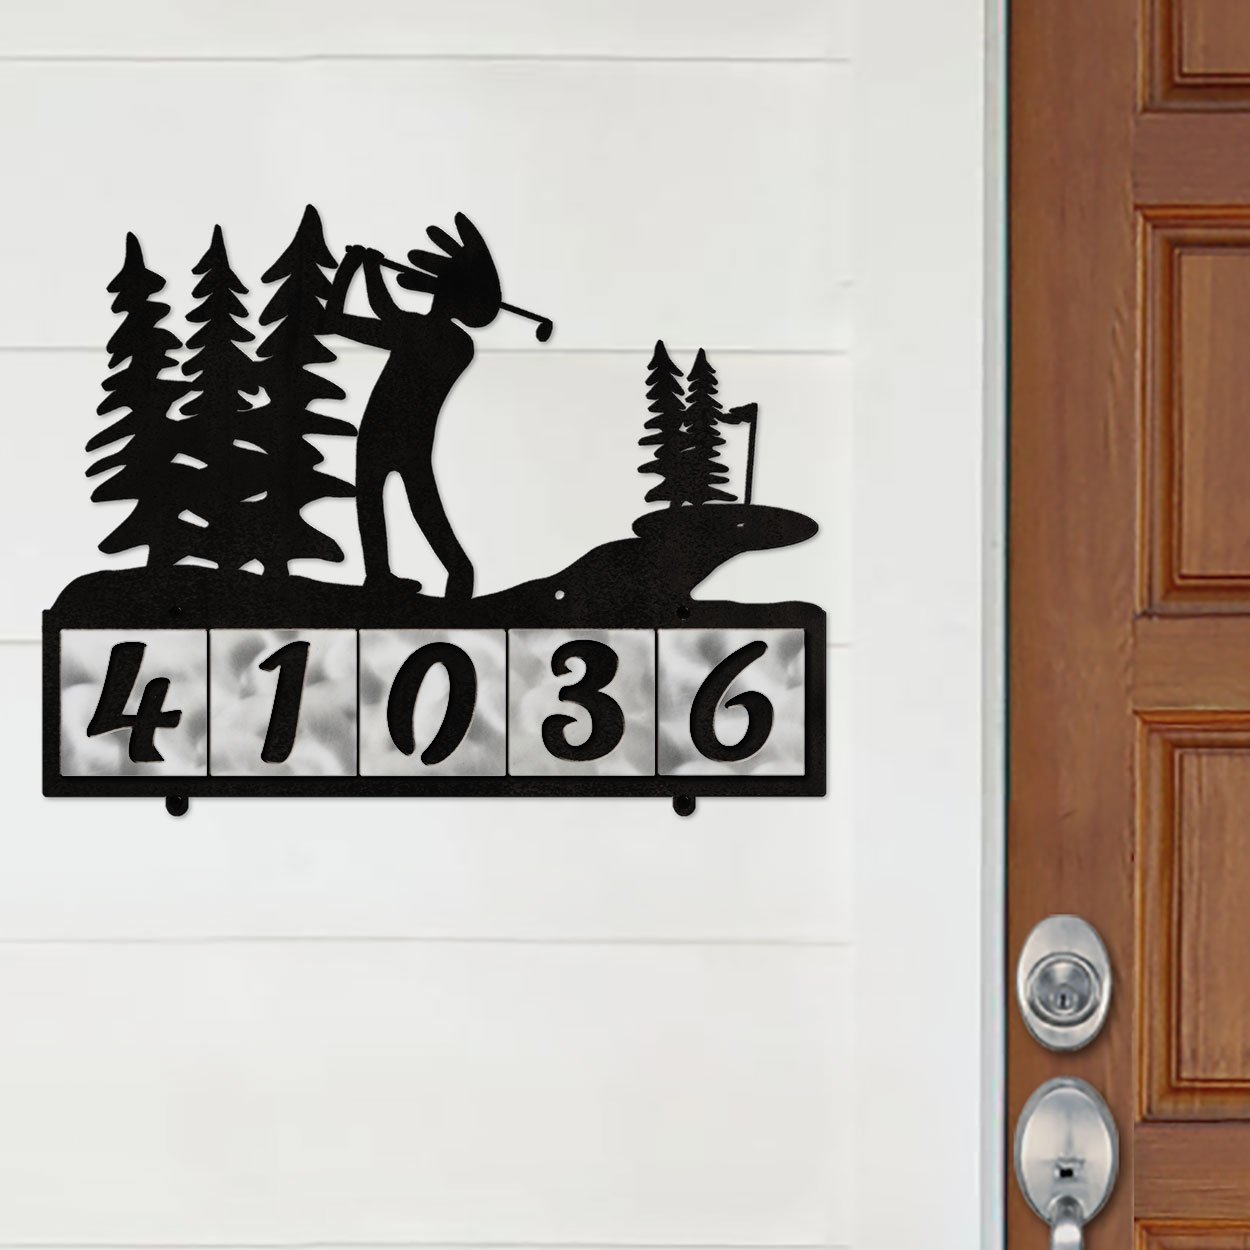 609145 - XL Kokopelli Golfer in the Woods Design 5-Digit Horizontal 6in Tile Outdoor House Numbers